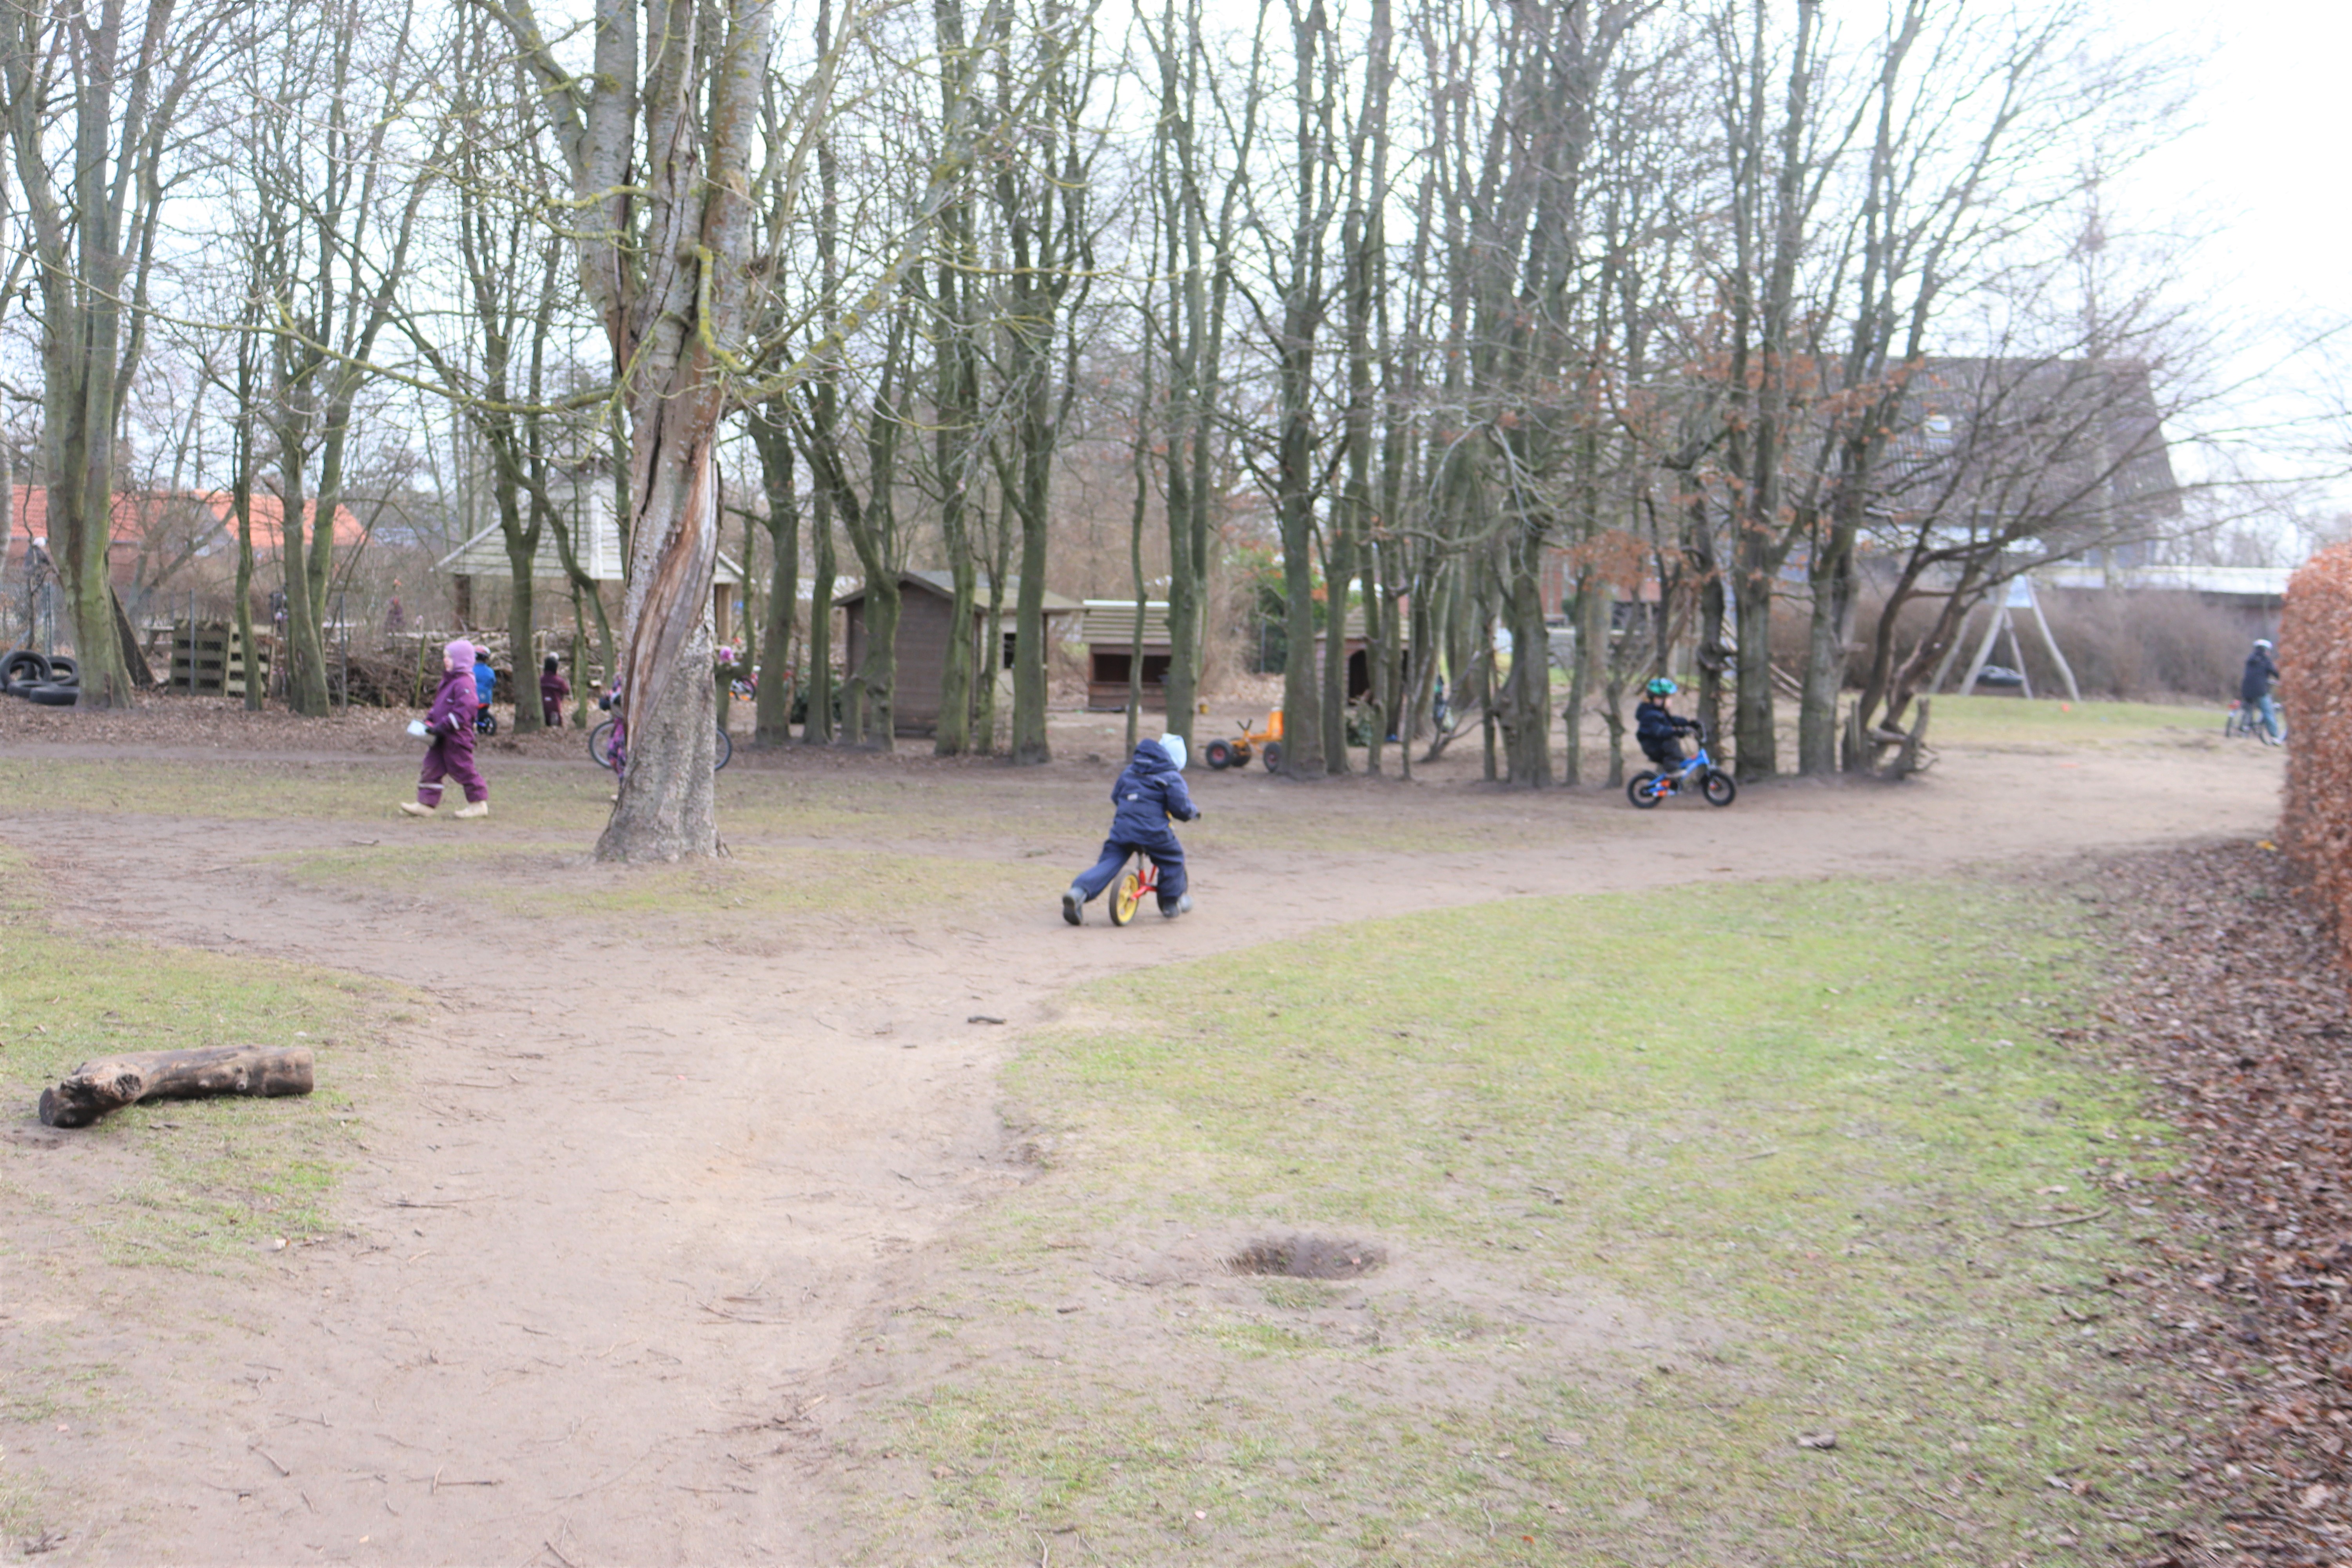 Stort naturområde i Mariehønen, hvor børn cykler